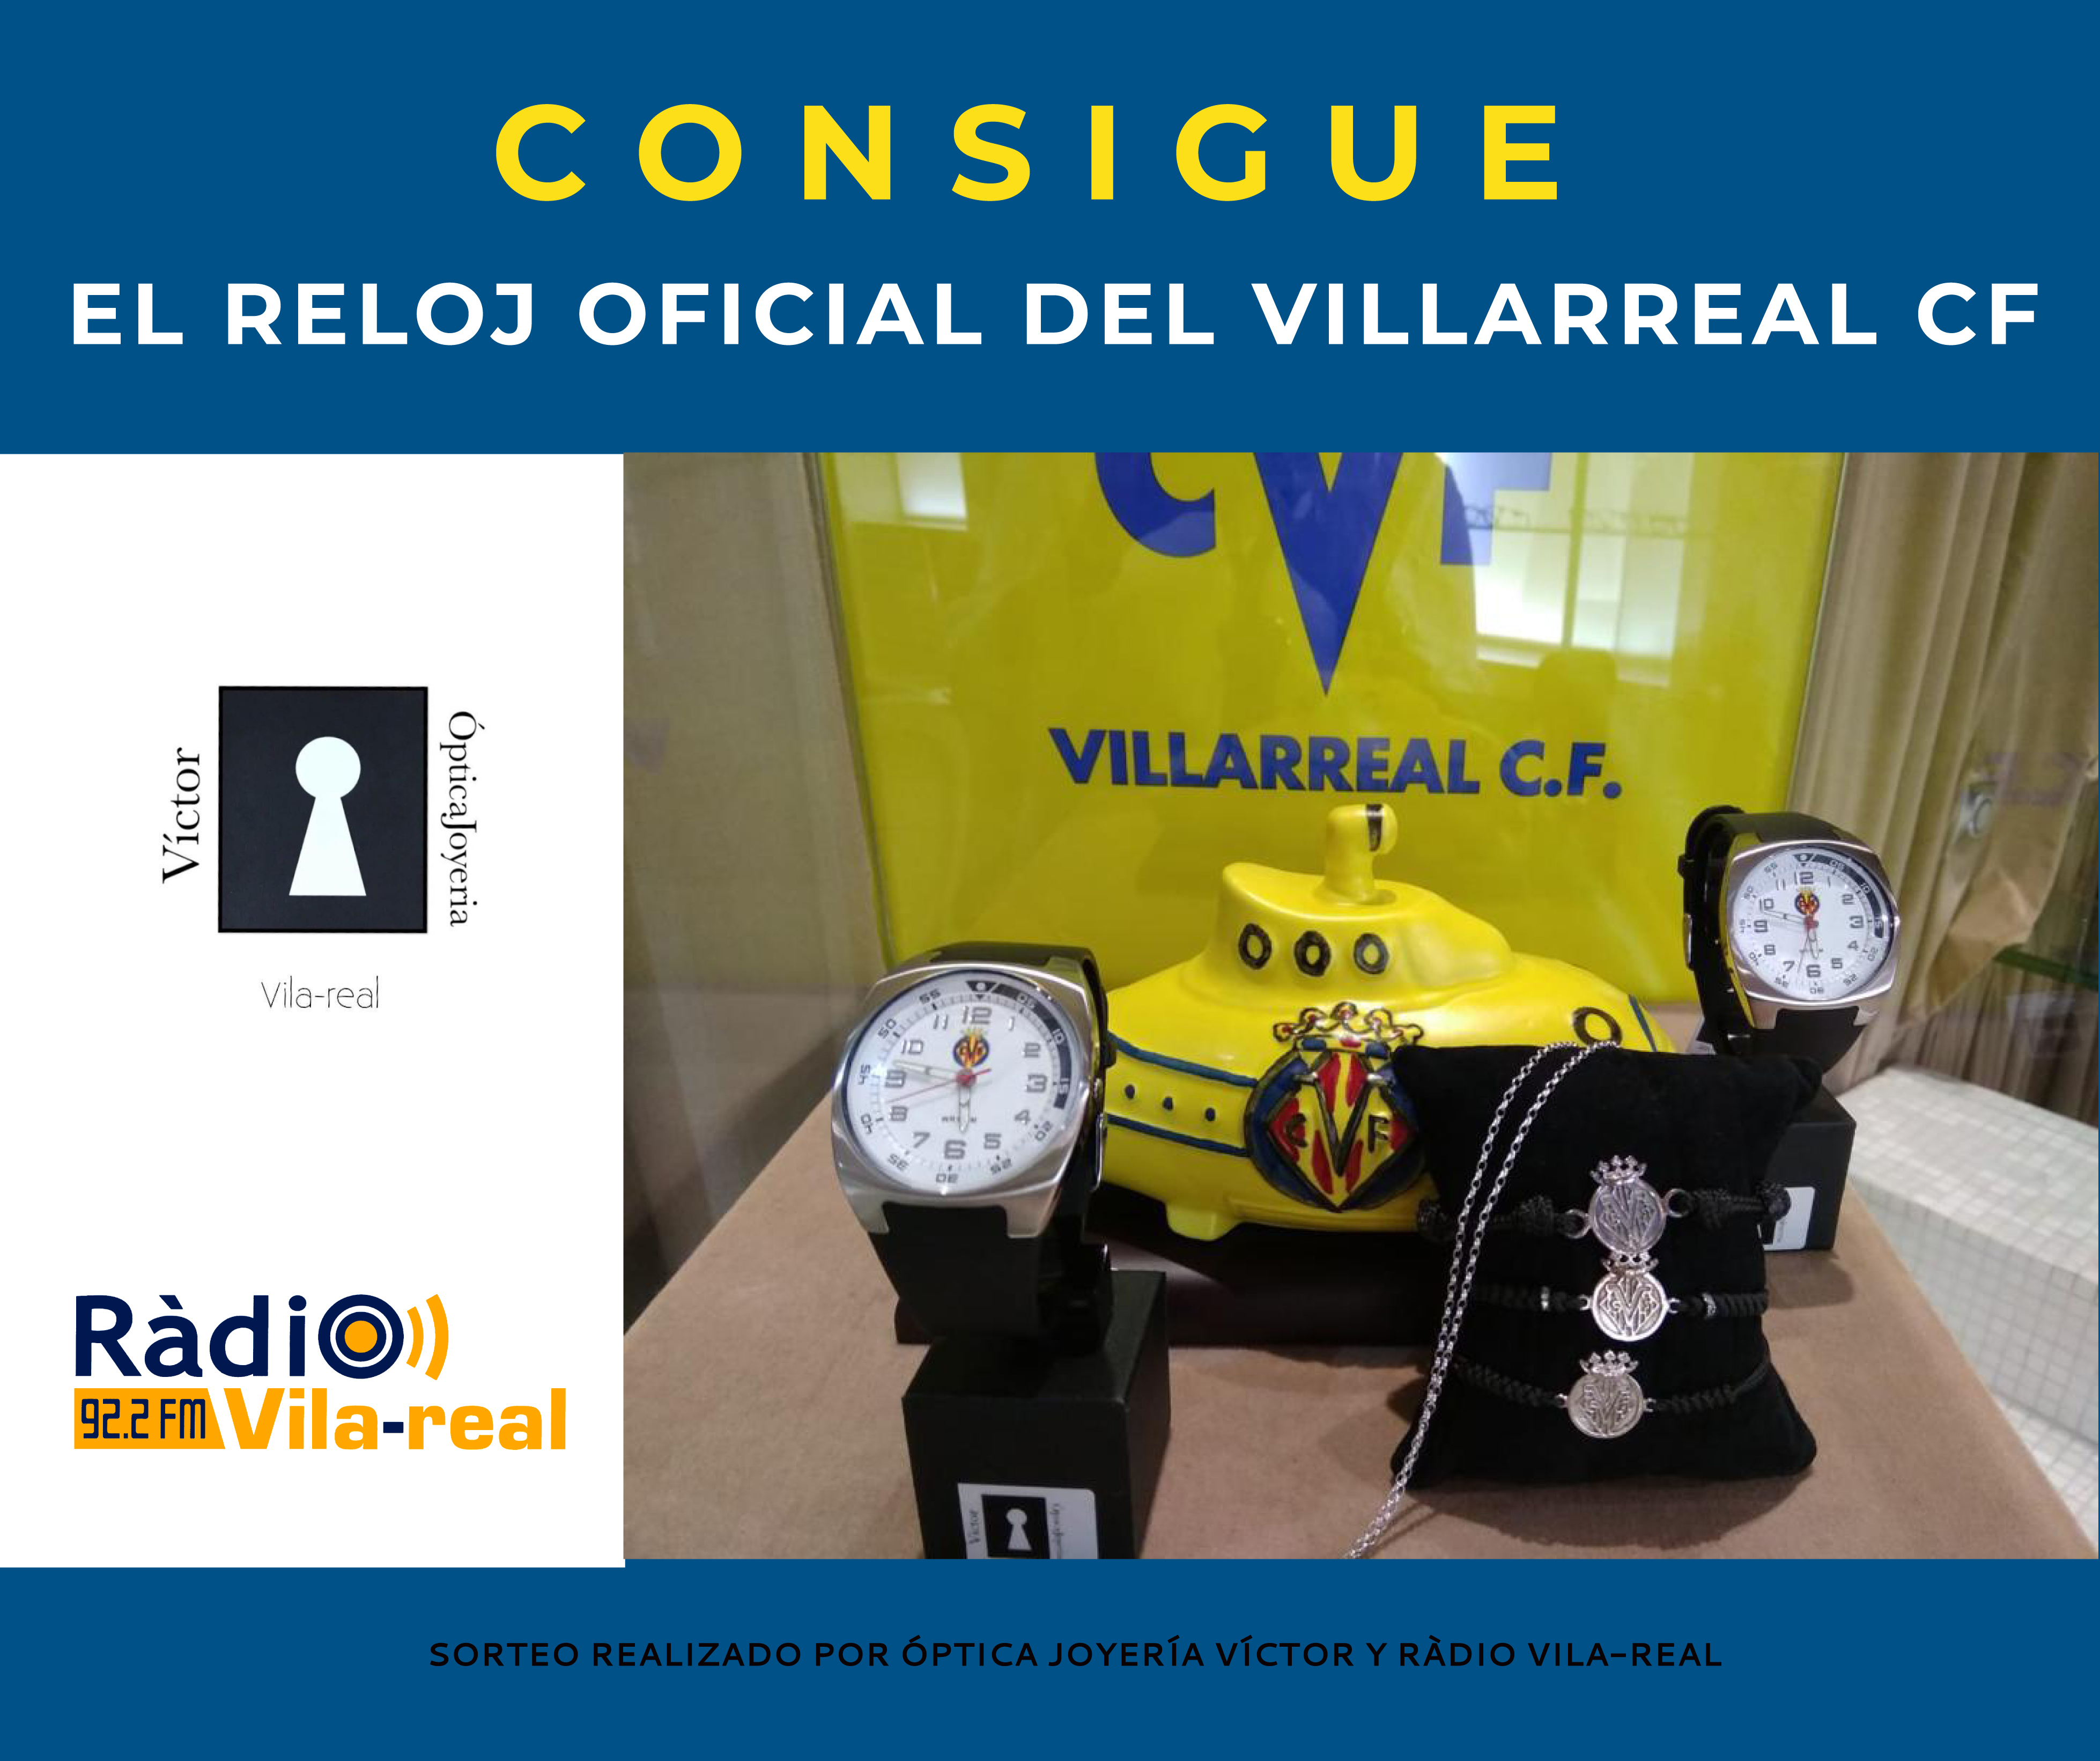 Consigue el reloj oficial del Villarreal CF.